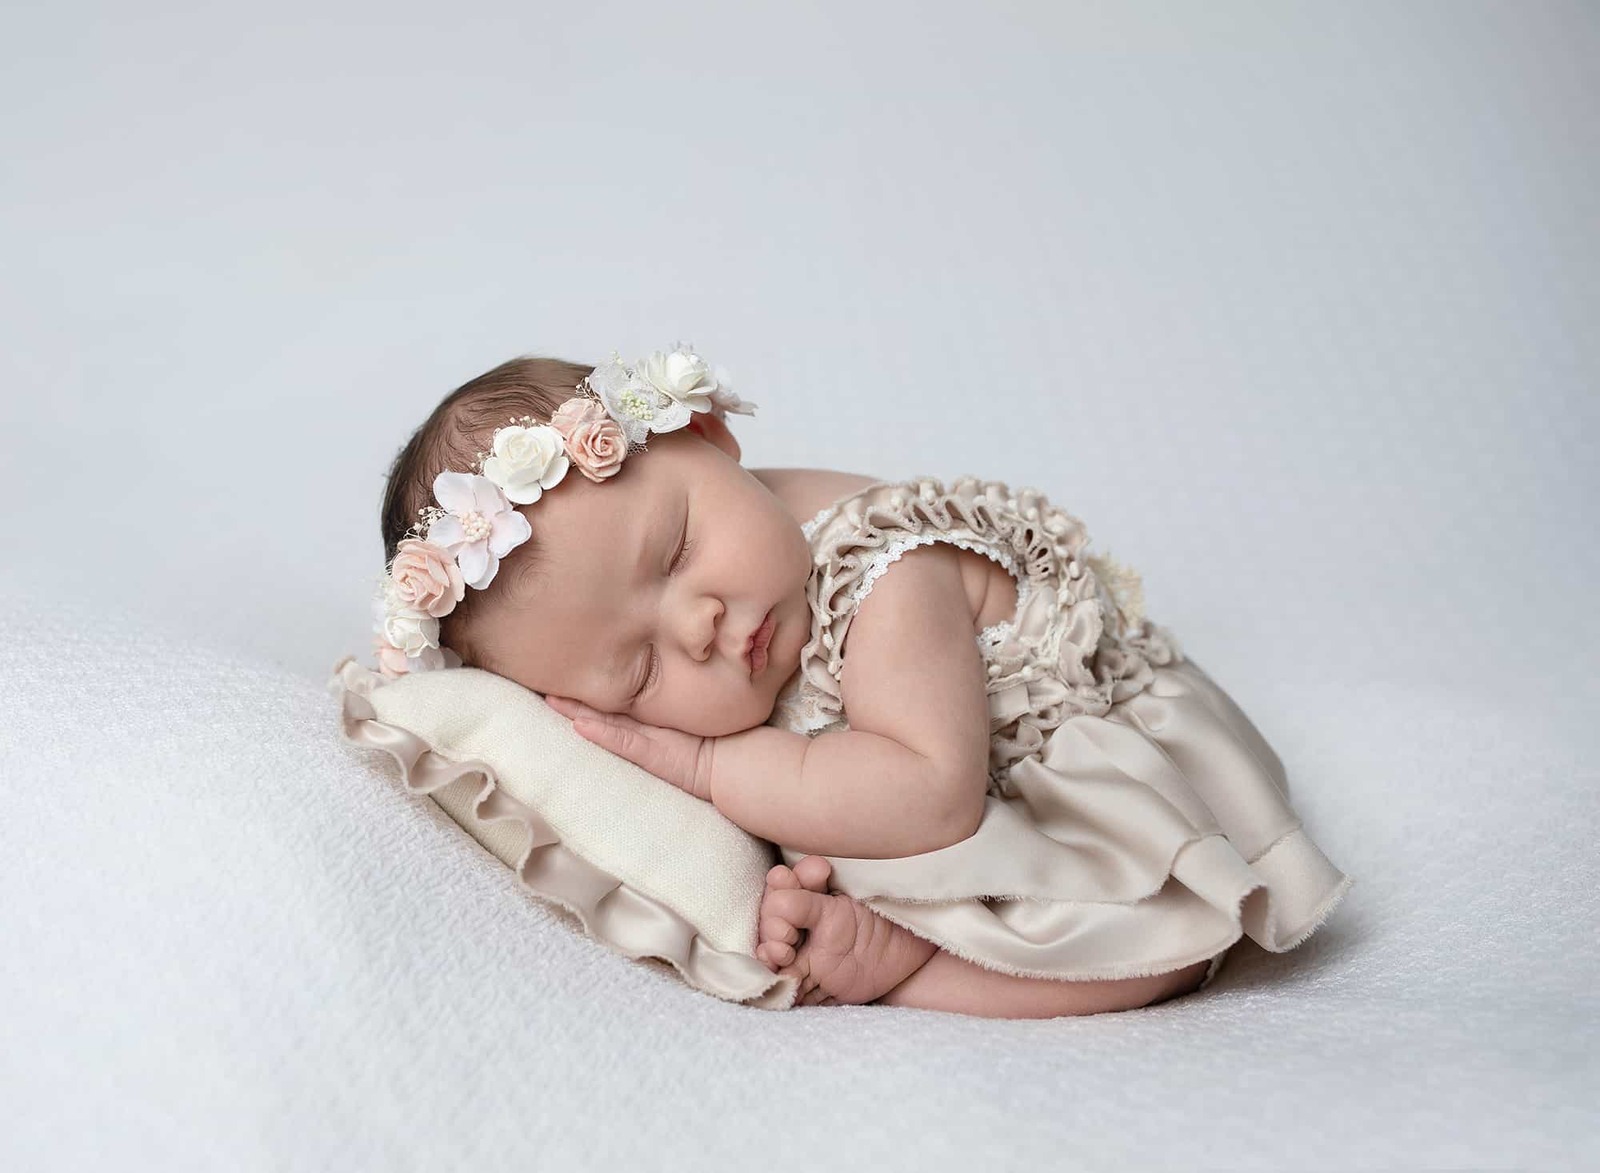 A newborn girl posed on a pillow wearing a flower crown at Bobi Biederman Photography studio.